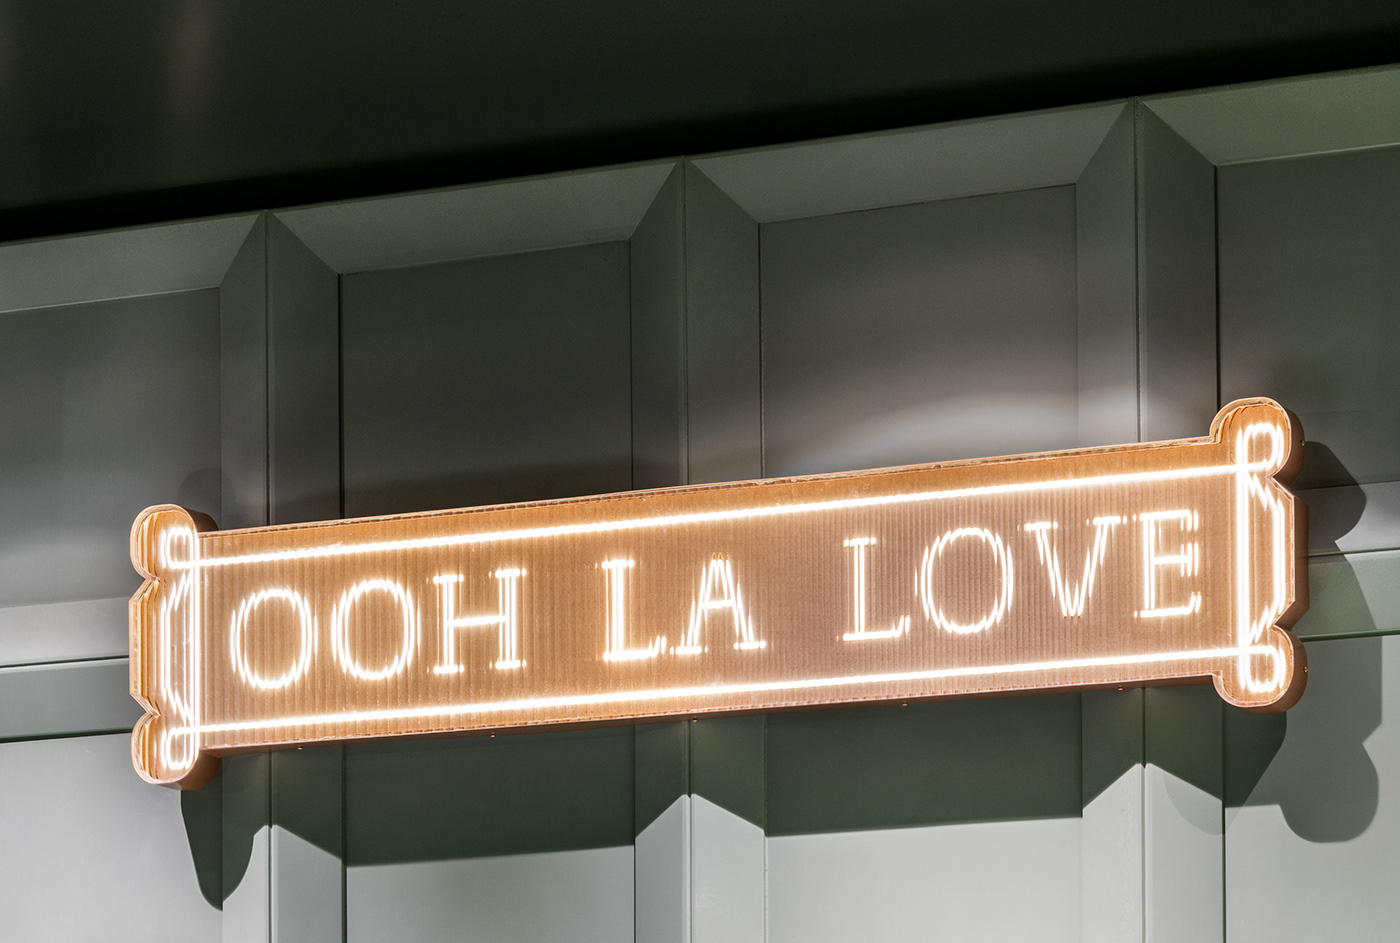 CIS googoods ooh la love 室內設計 生活起物 空間攝影 空間設計 branding 